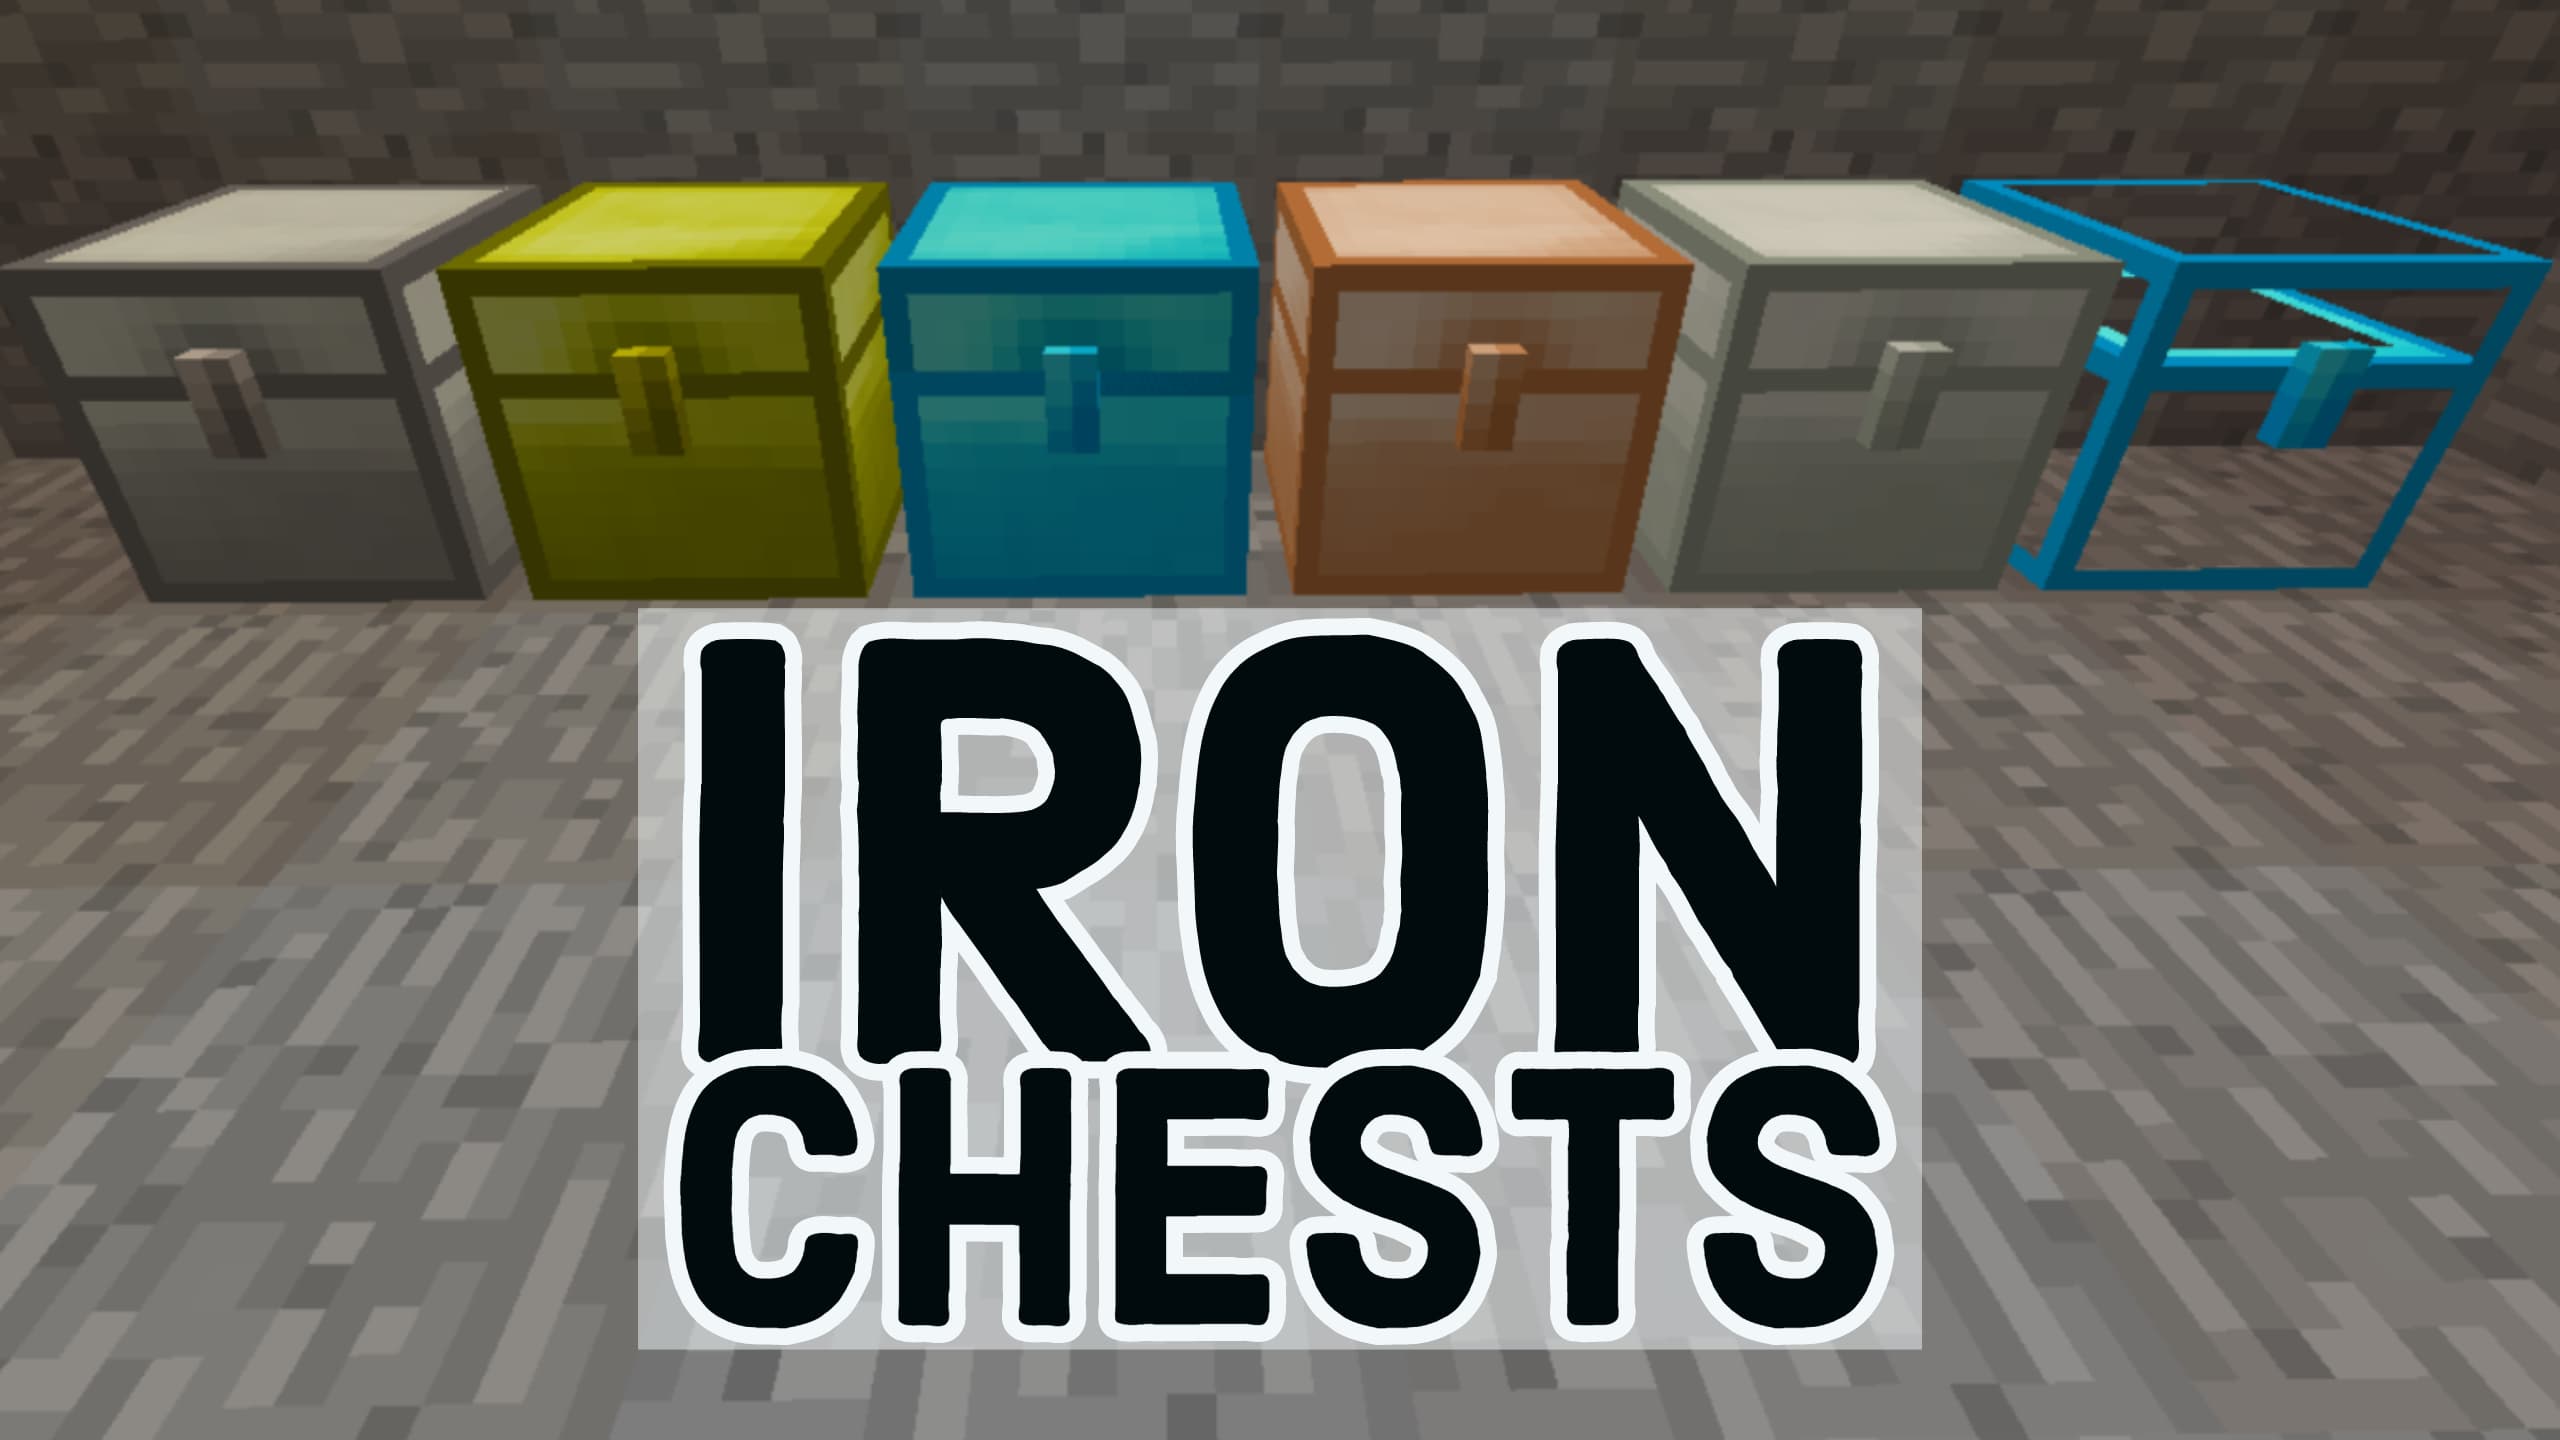 [Mod] Iron Chests - 1.7.10 → 1.18.1